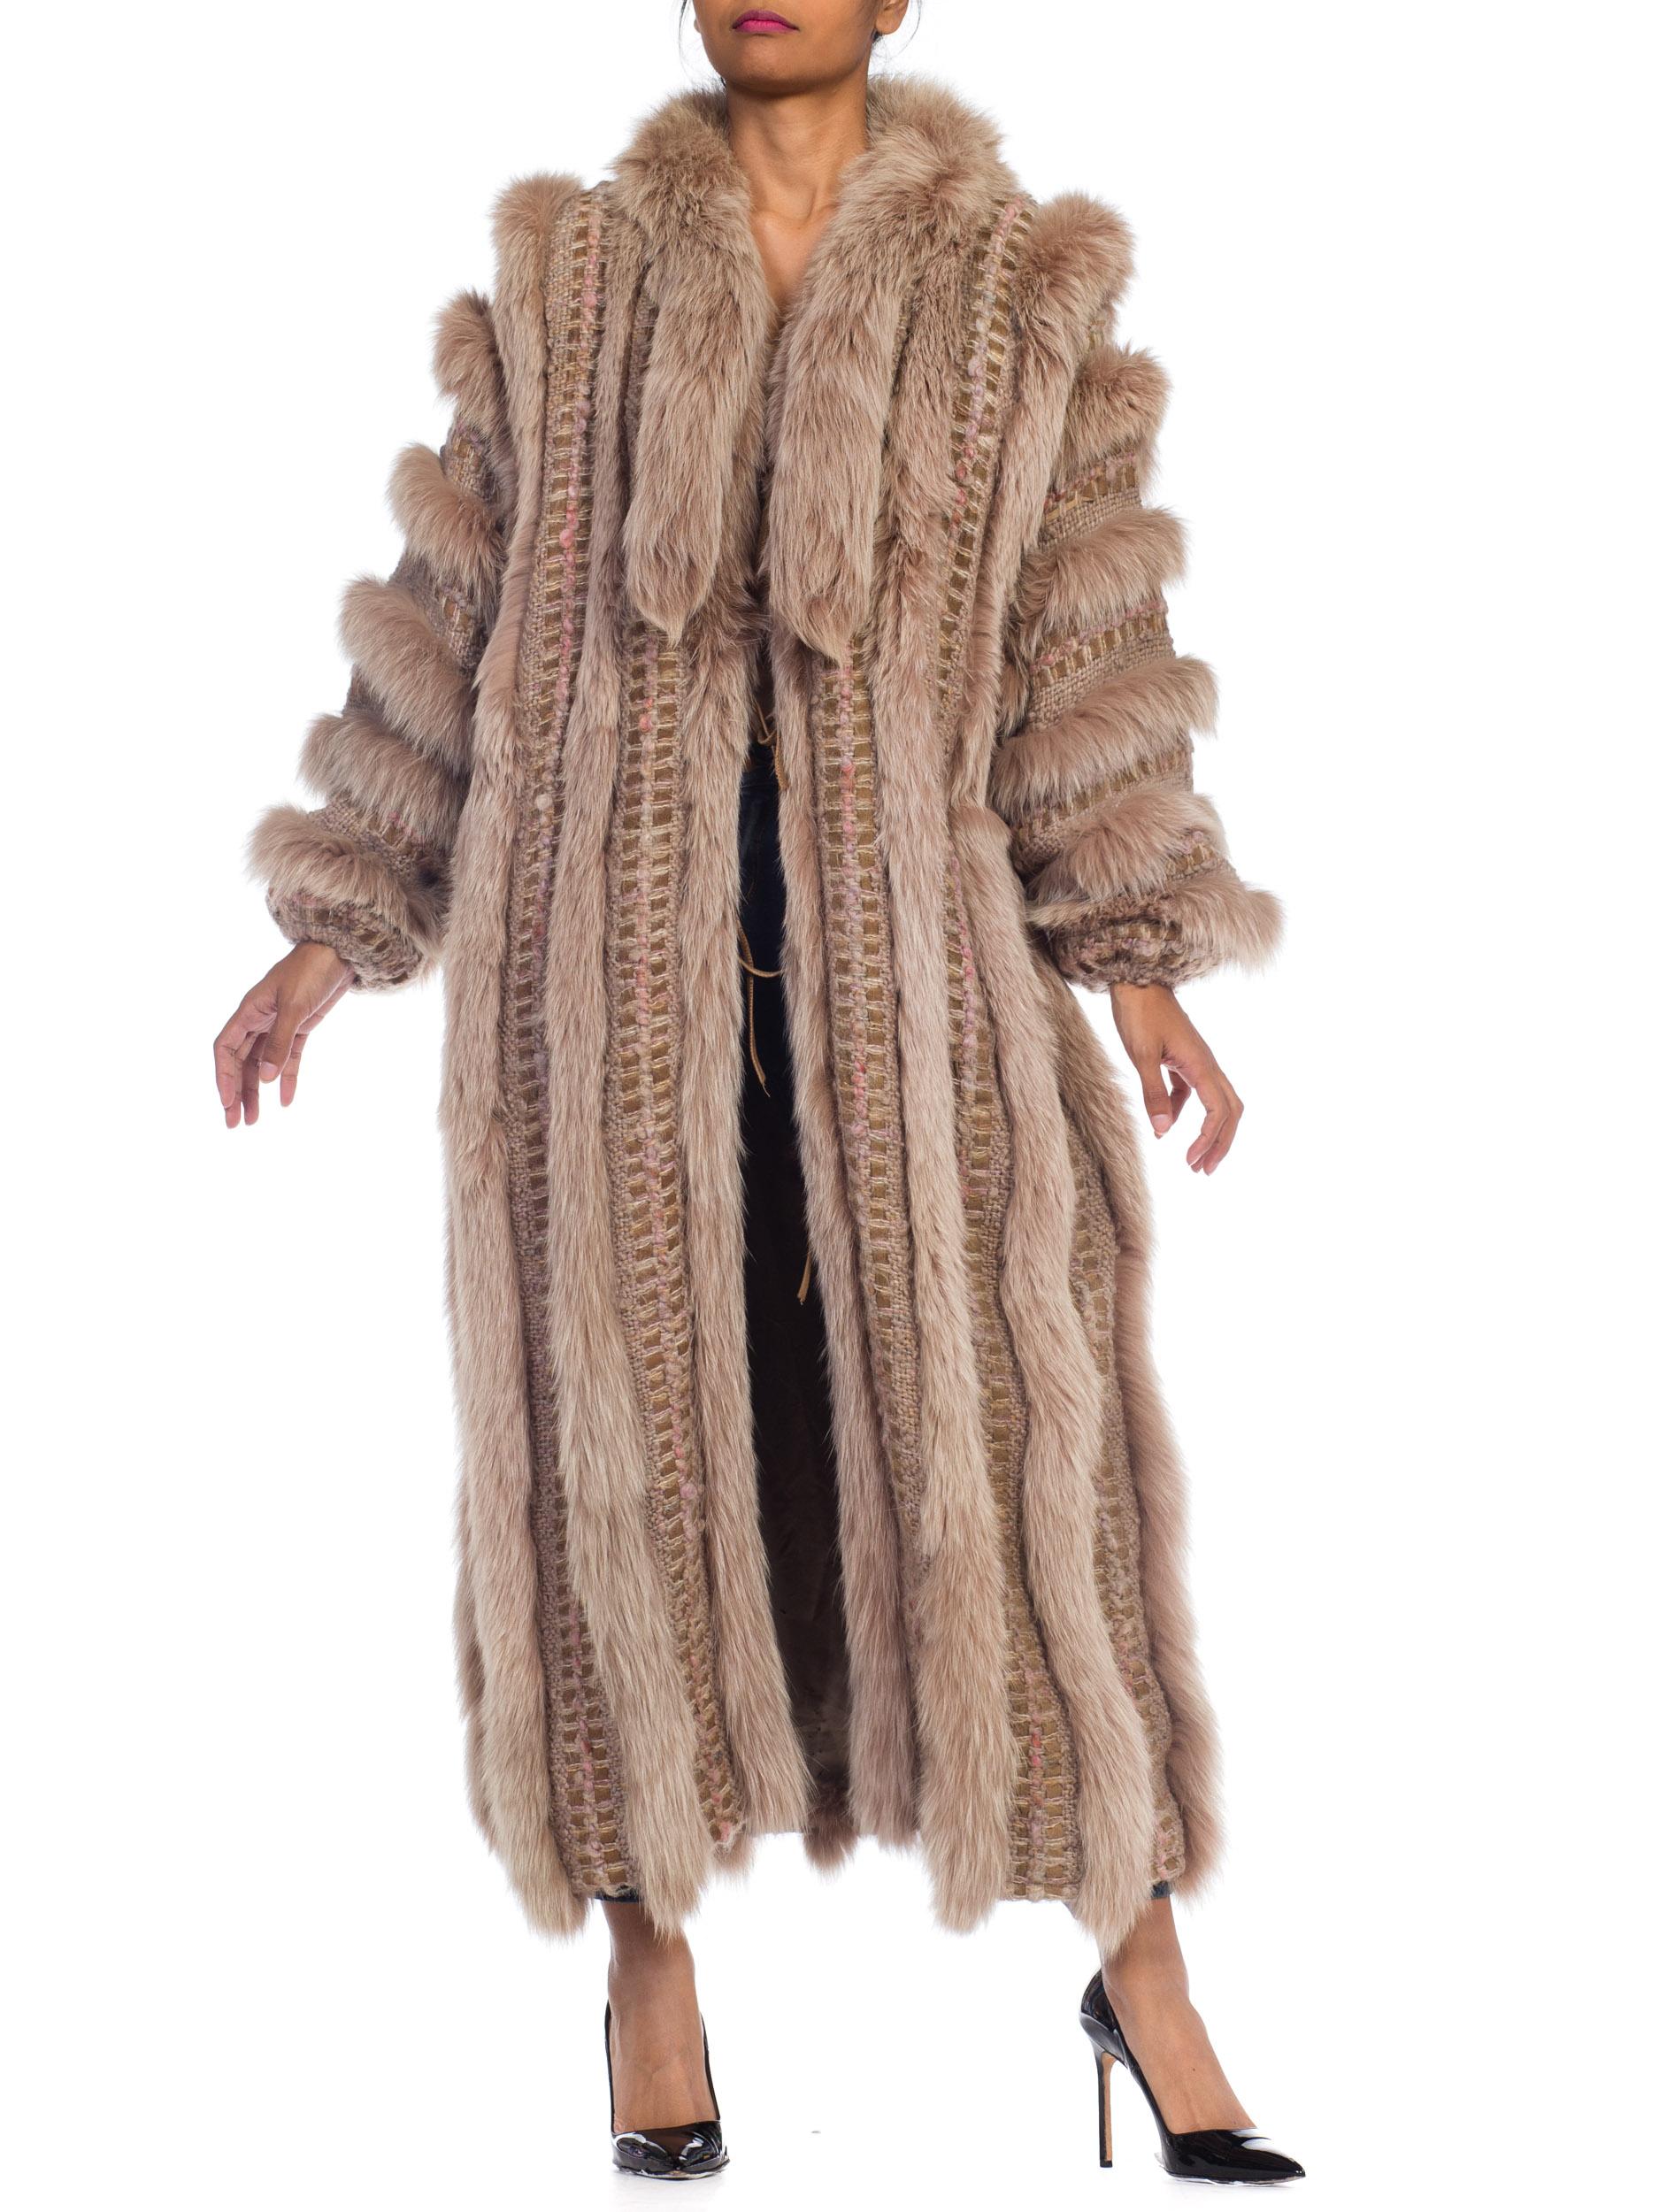 Wild Oversized Fox Fur & Knit Coat 6